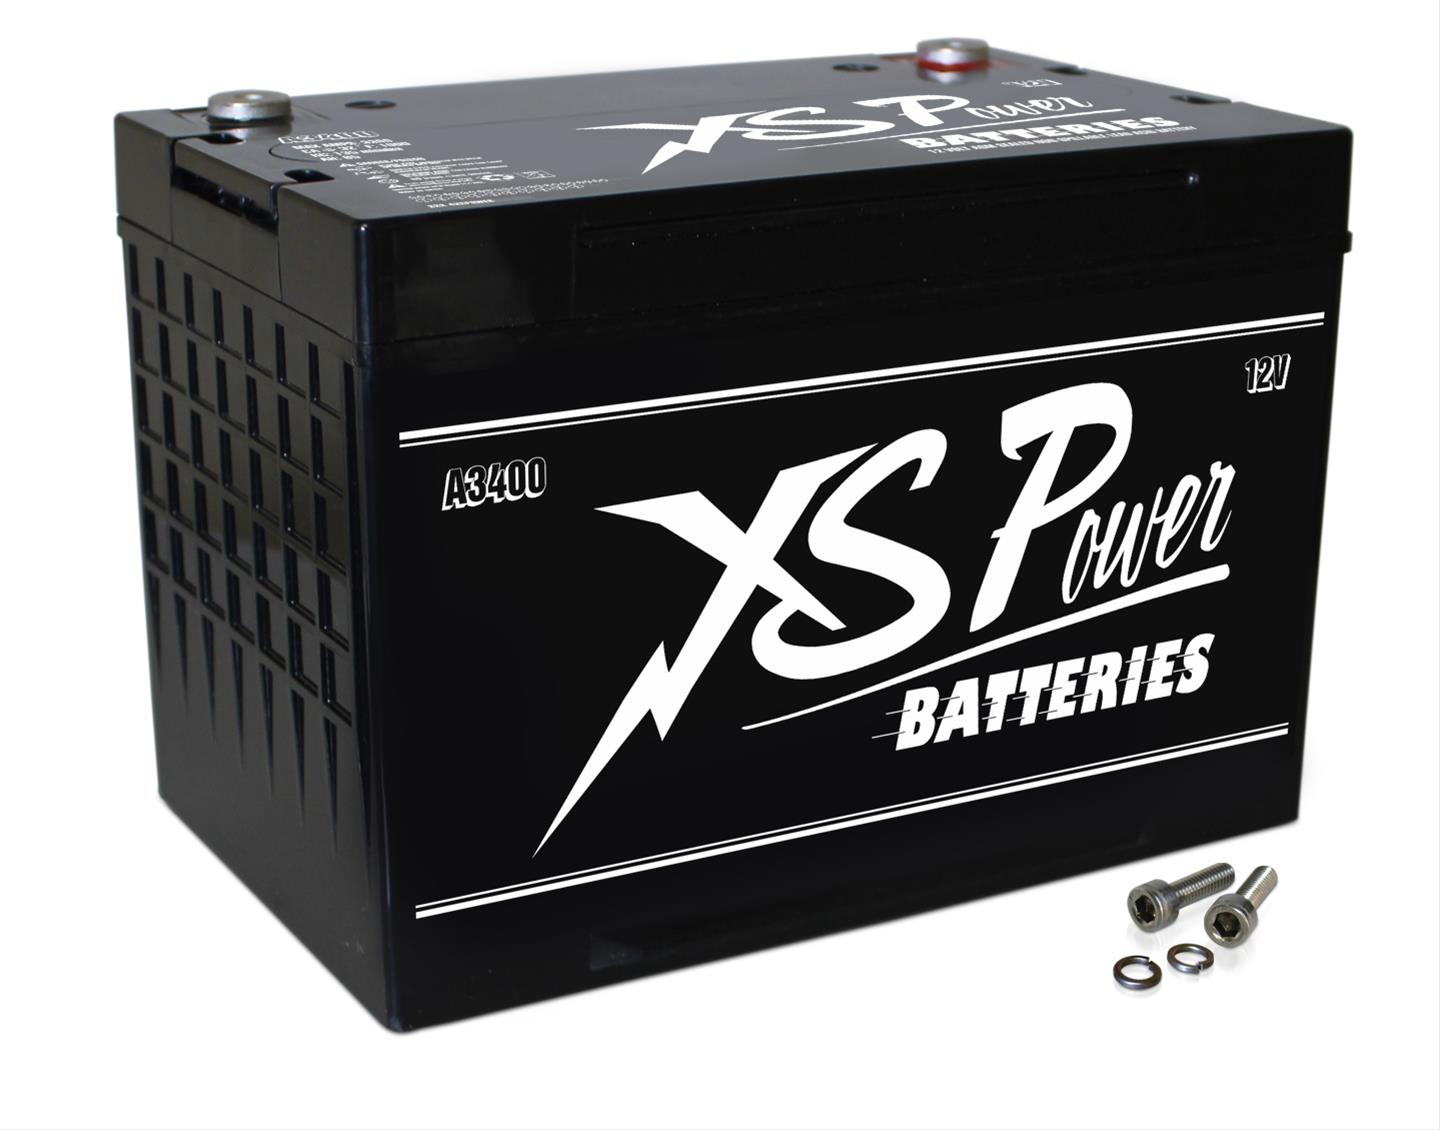 Power battery